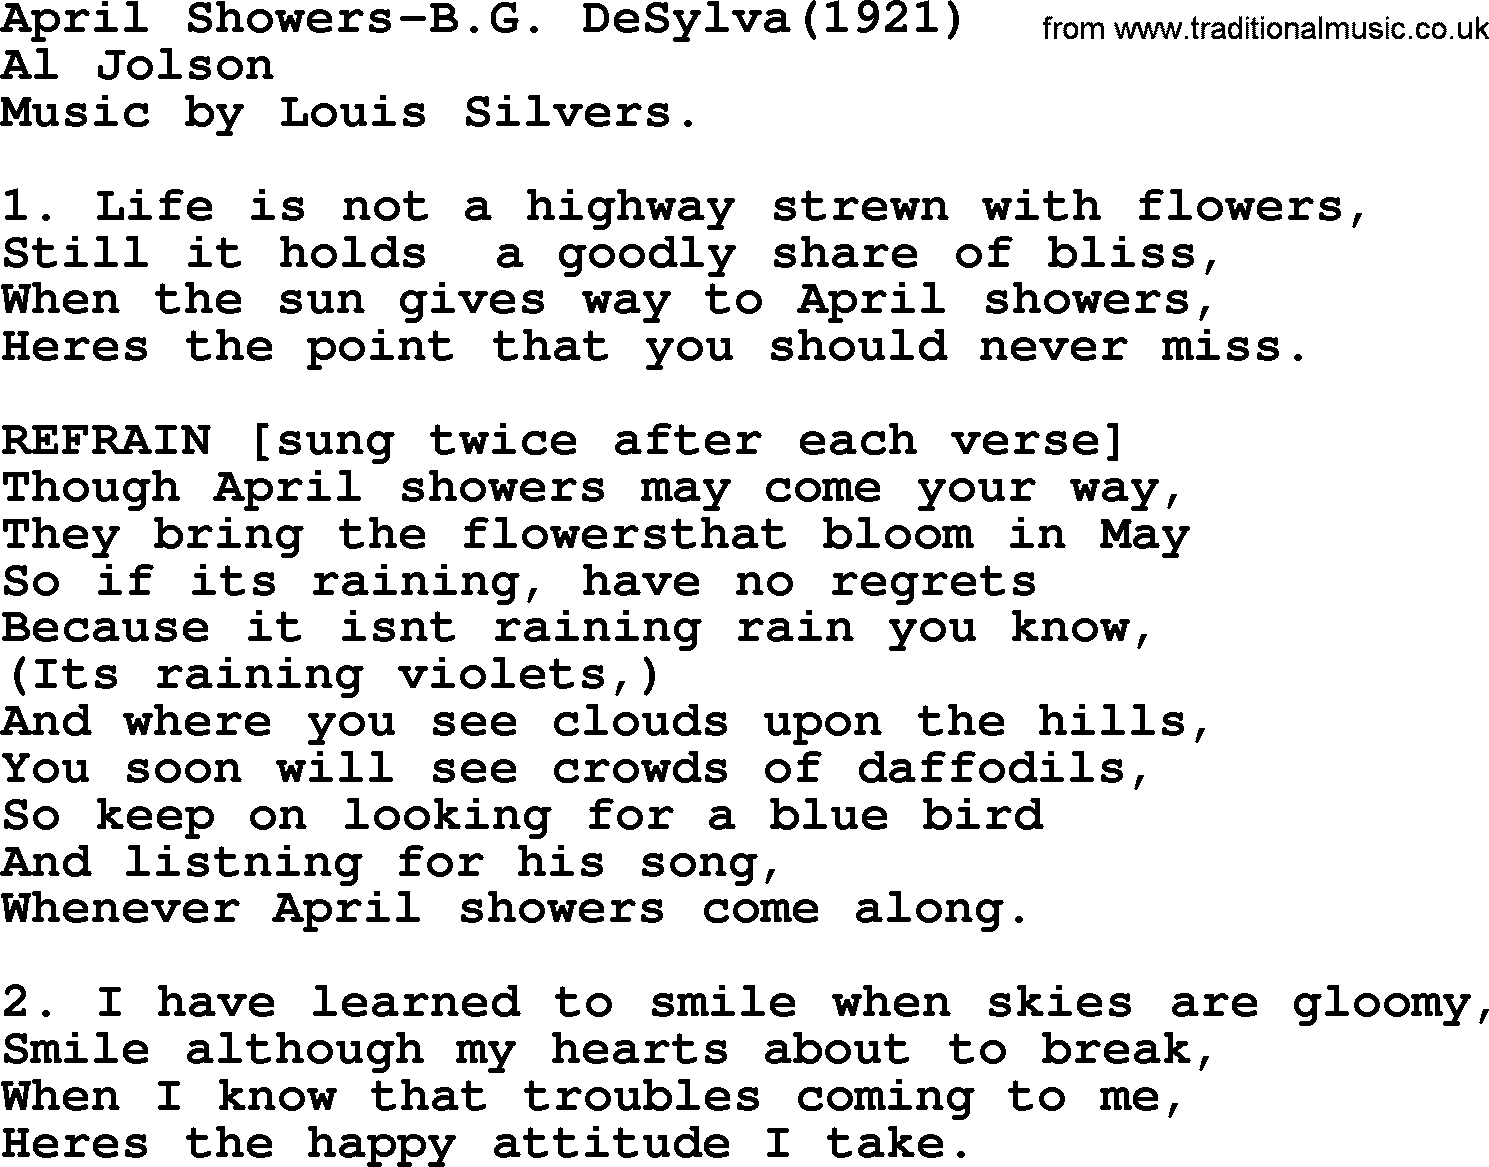 World War(WW1) One Song: April Showers-B G Desylva 1921, lyrics and PDF